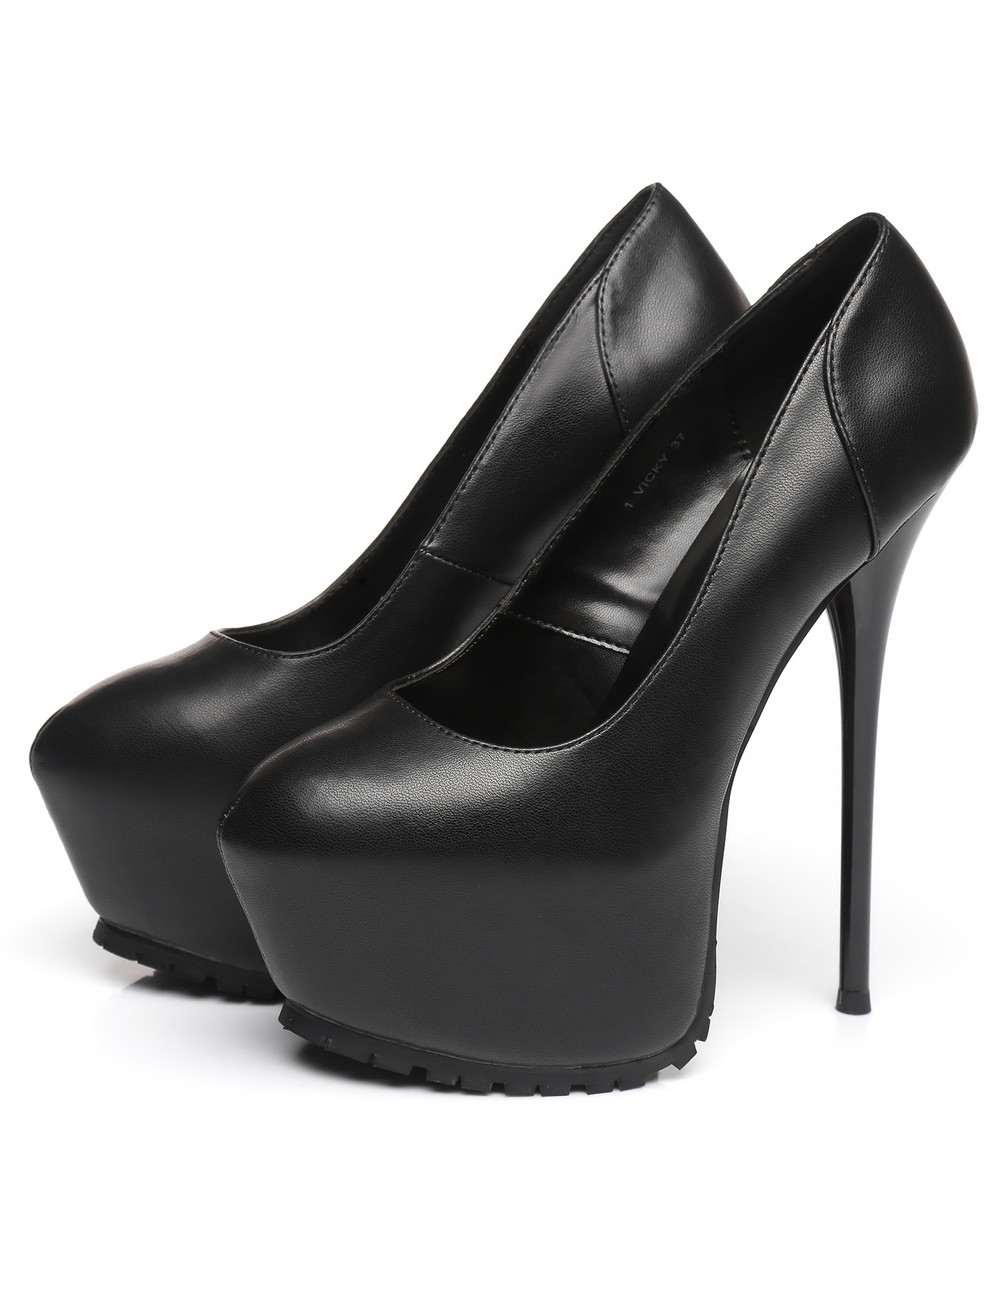 Black Vicky Giaro 16cm platform heel profile pumps - Giaro High Heels ...